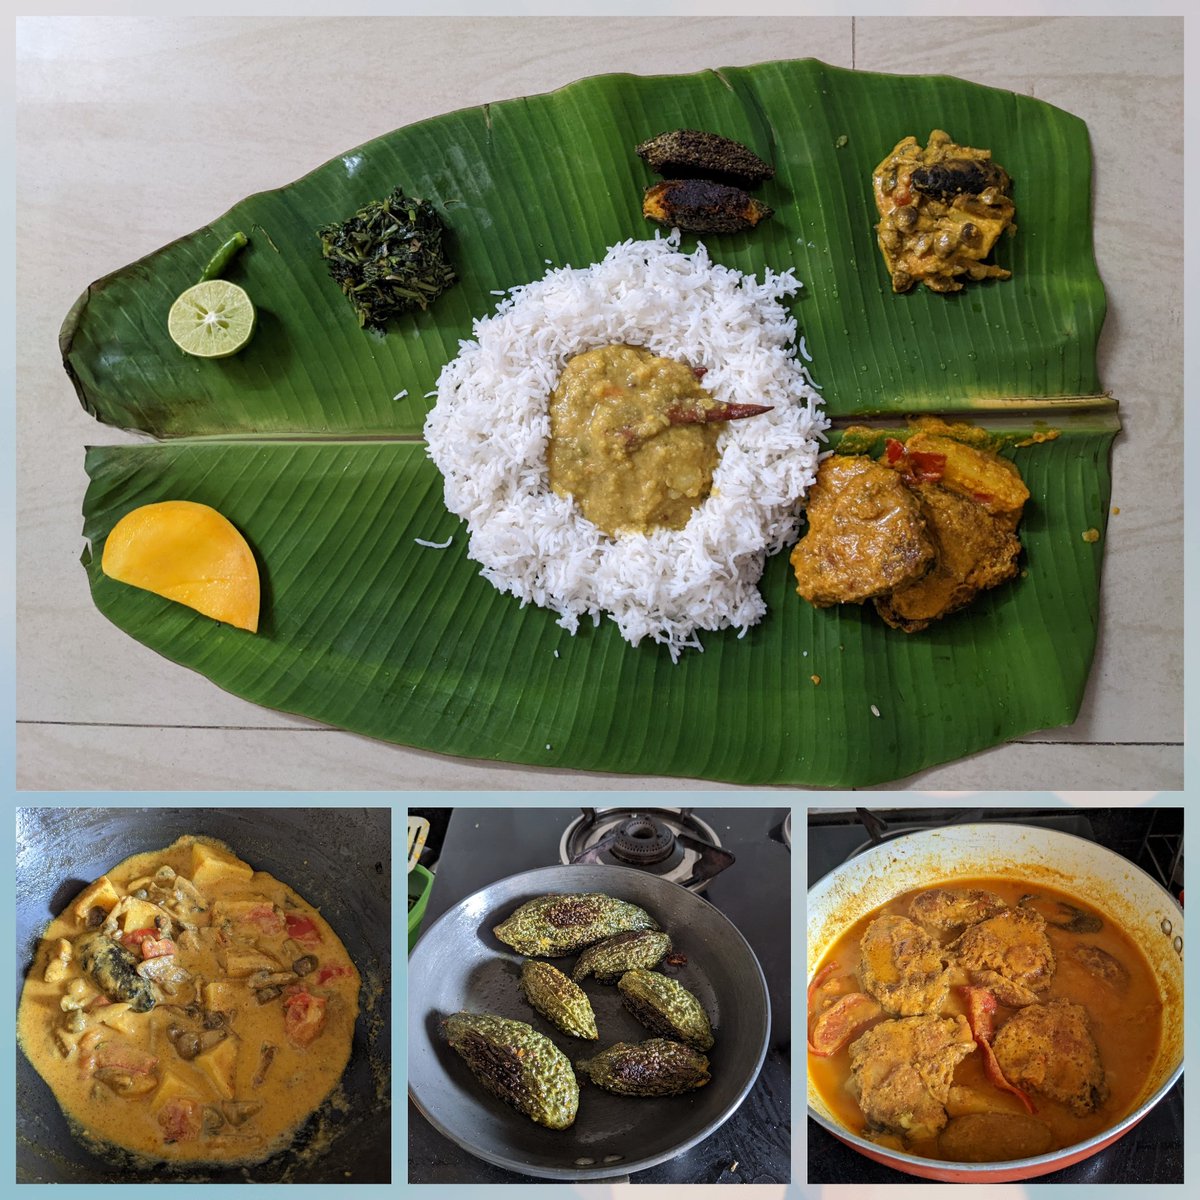 Party on Utkal Dibasa. #Odia #food #OdiaThali Rice (ଭାତ), Dalma (ଡାଲମା), Mushroom In Mustard sauce (ଛତୁ ଆମ୍ବୁଲ ରାଇ), Stuff Karela (ଗୋଟା କଲରା ଭଜା), Fish Masala (ମାଛ କସା), leafy green fry (Saga Bhaja) from #gpkichen #FoodieOdia
ପାଚିଲା ଆମ୍ବ
#ଉତ୍କଳଦିବସ 
#ଓଡ଼ିଆ 
#Odisha
#UtkalaDibasa